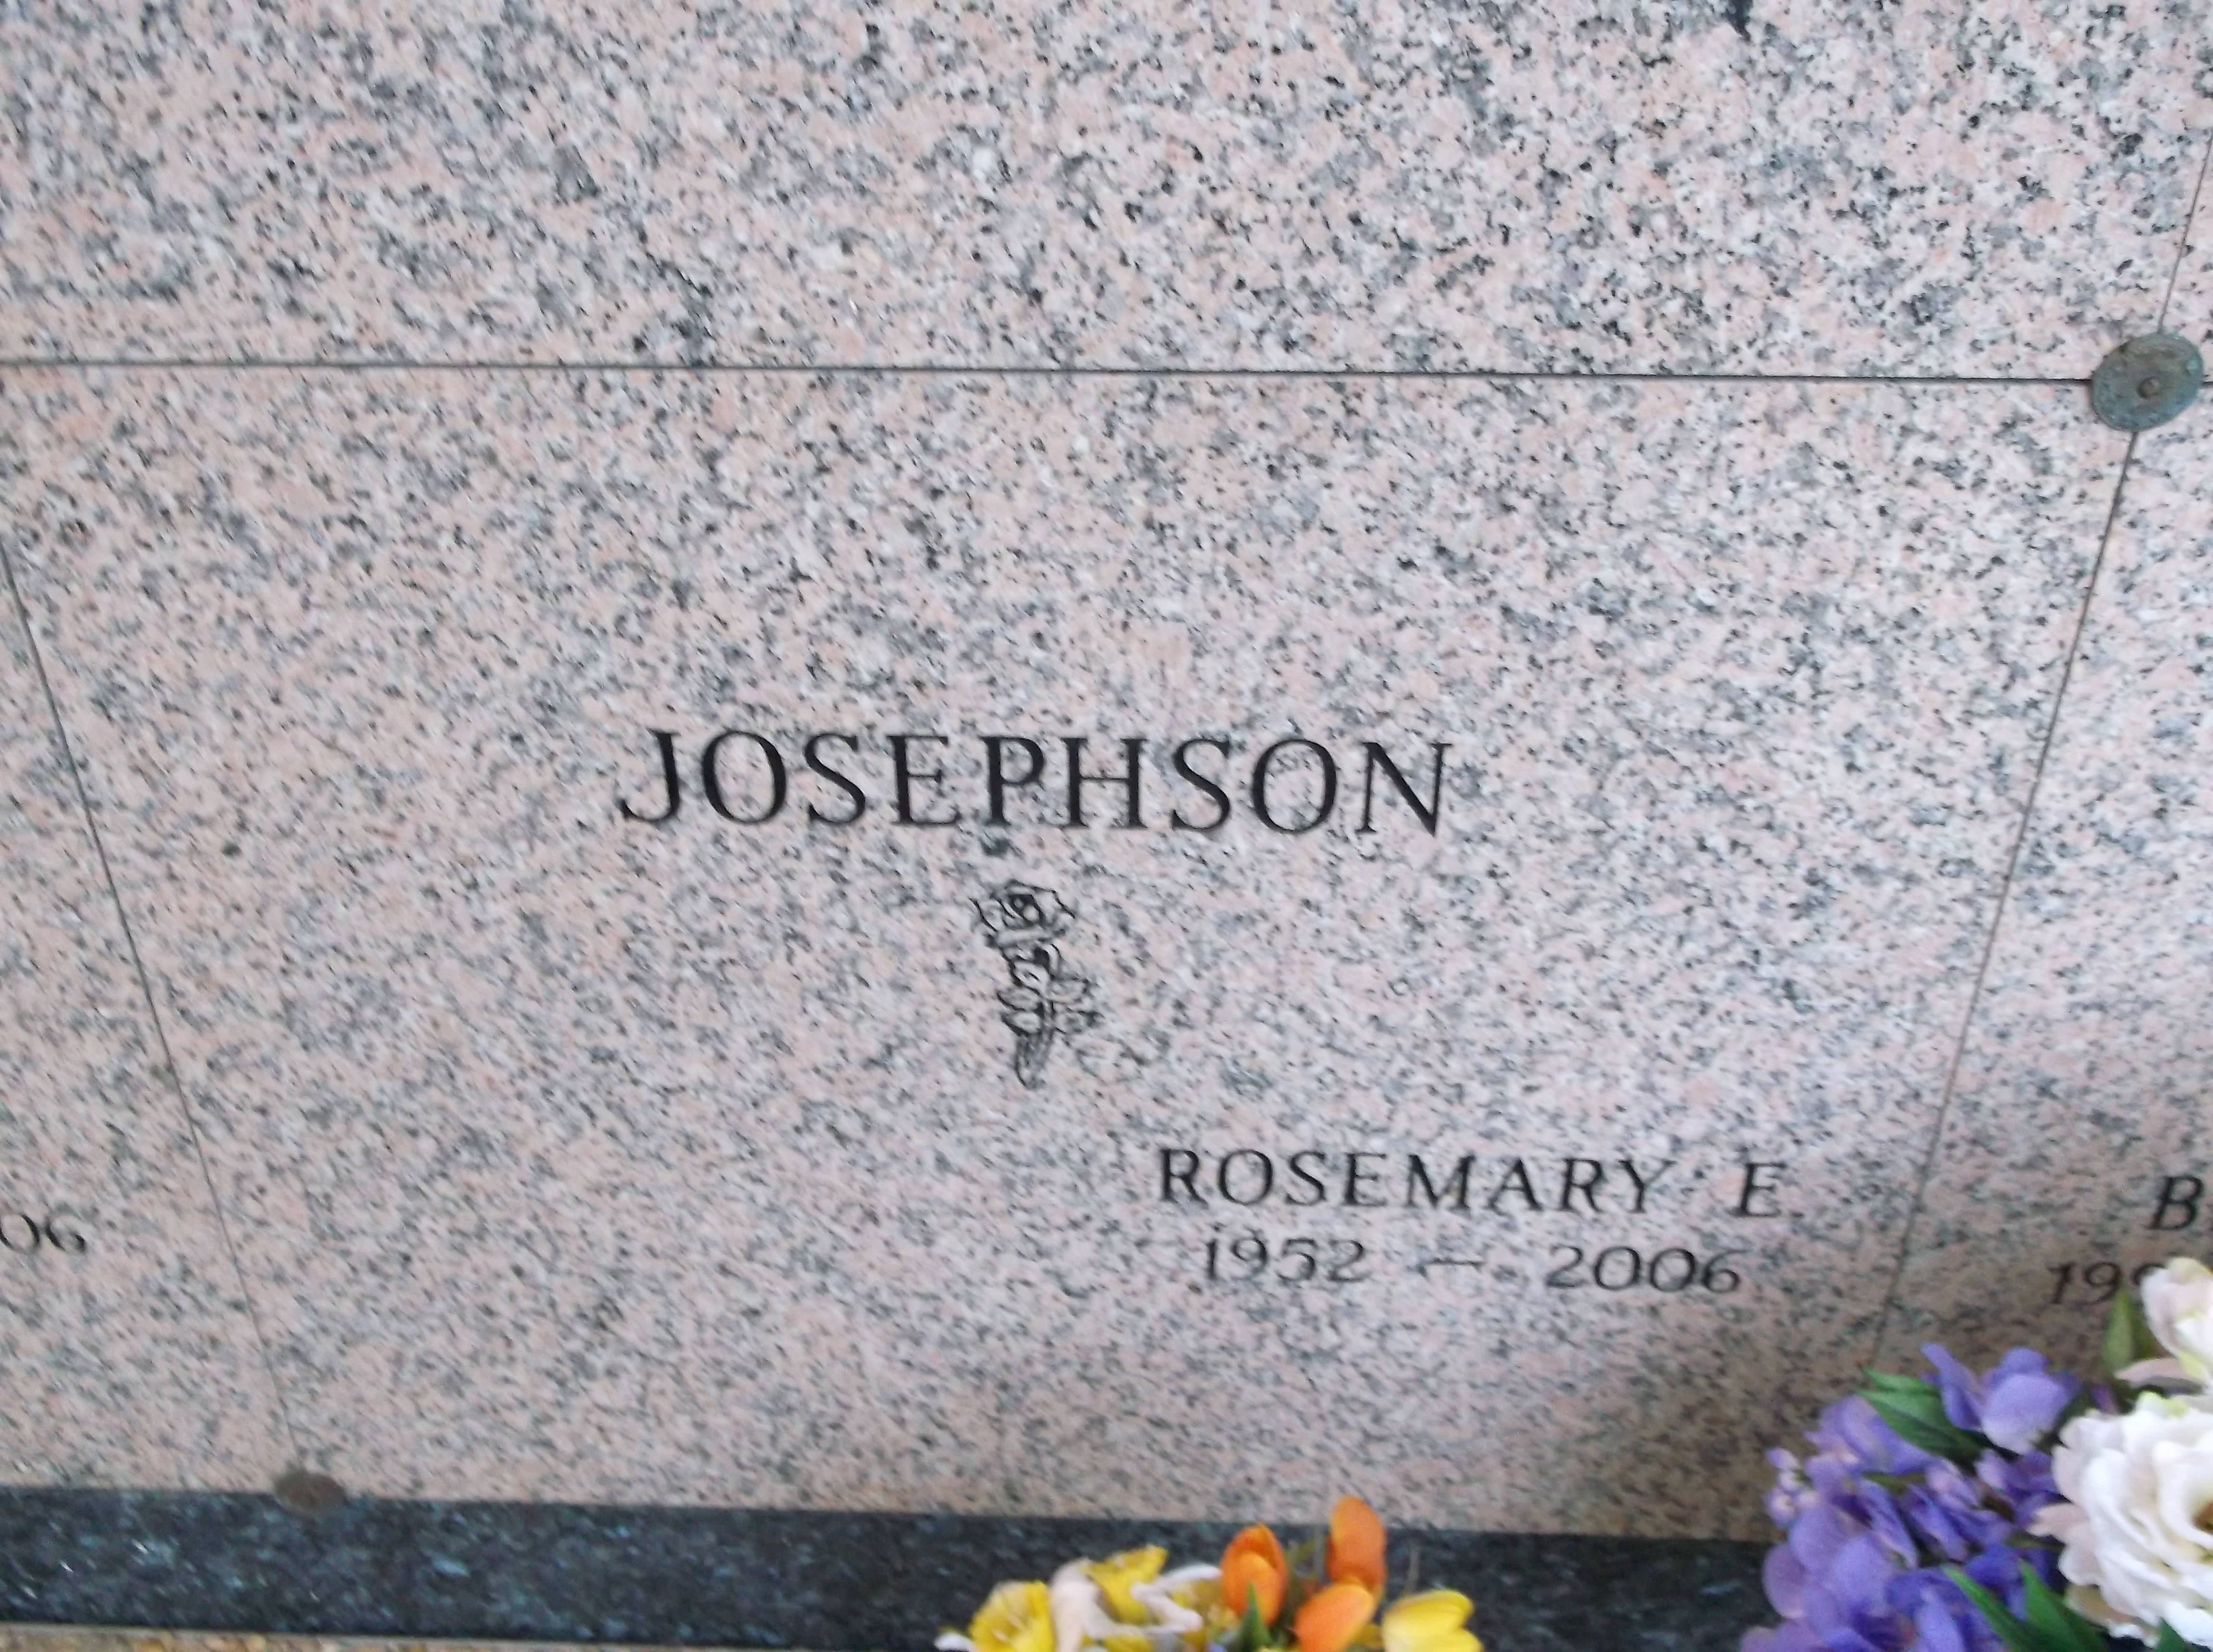 Rosemary E Josephson